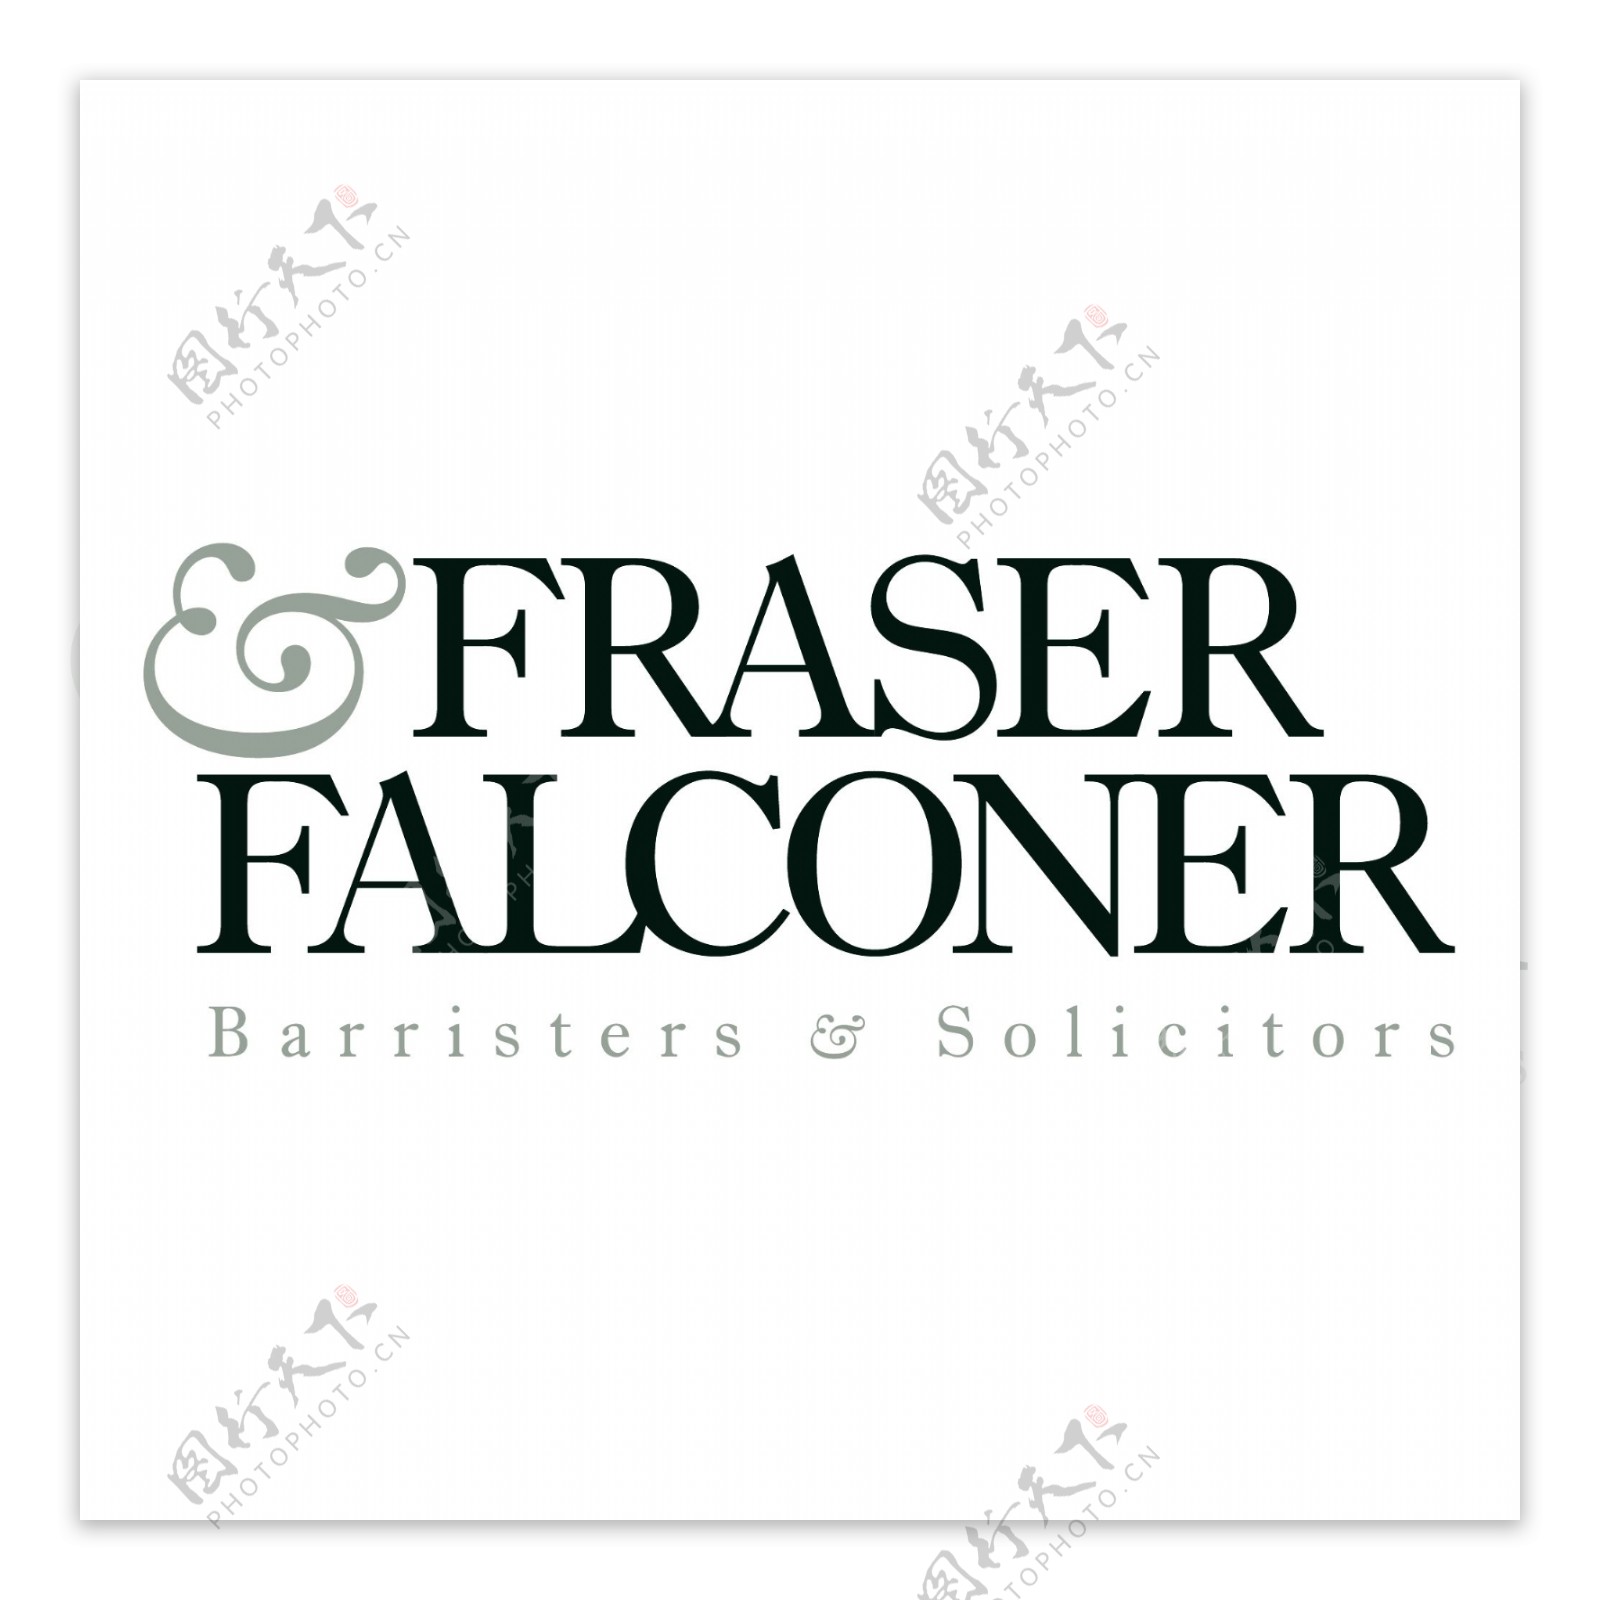 弗雷泽Falconer大律师和律师